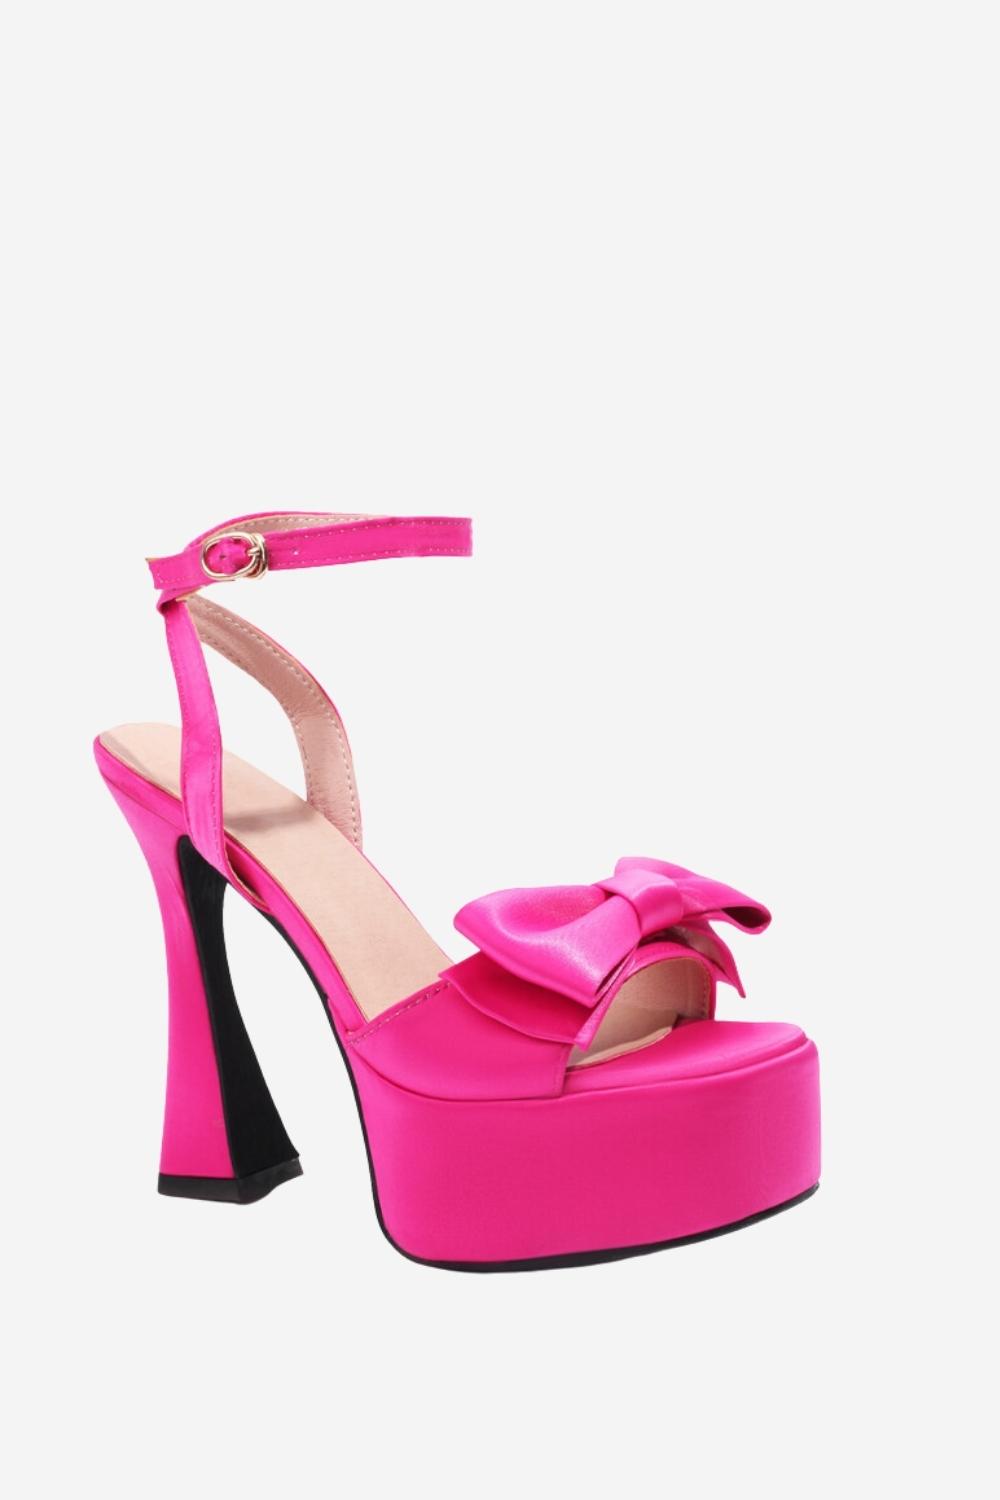 Chunky Hot Pink High Heel Sandaler med sløyfe